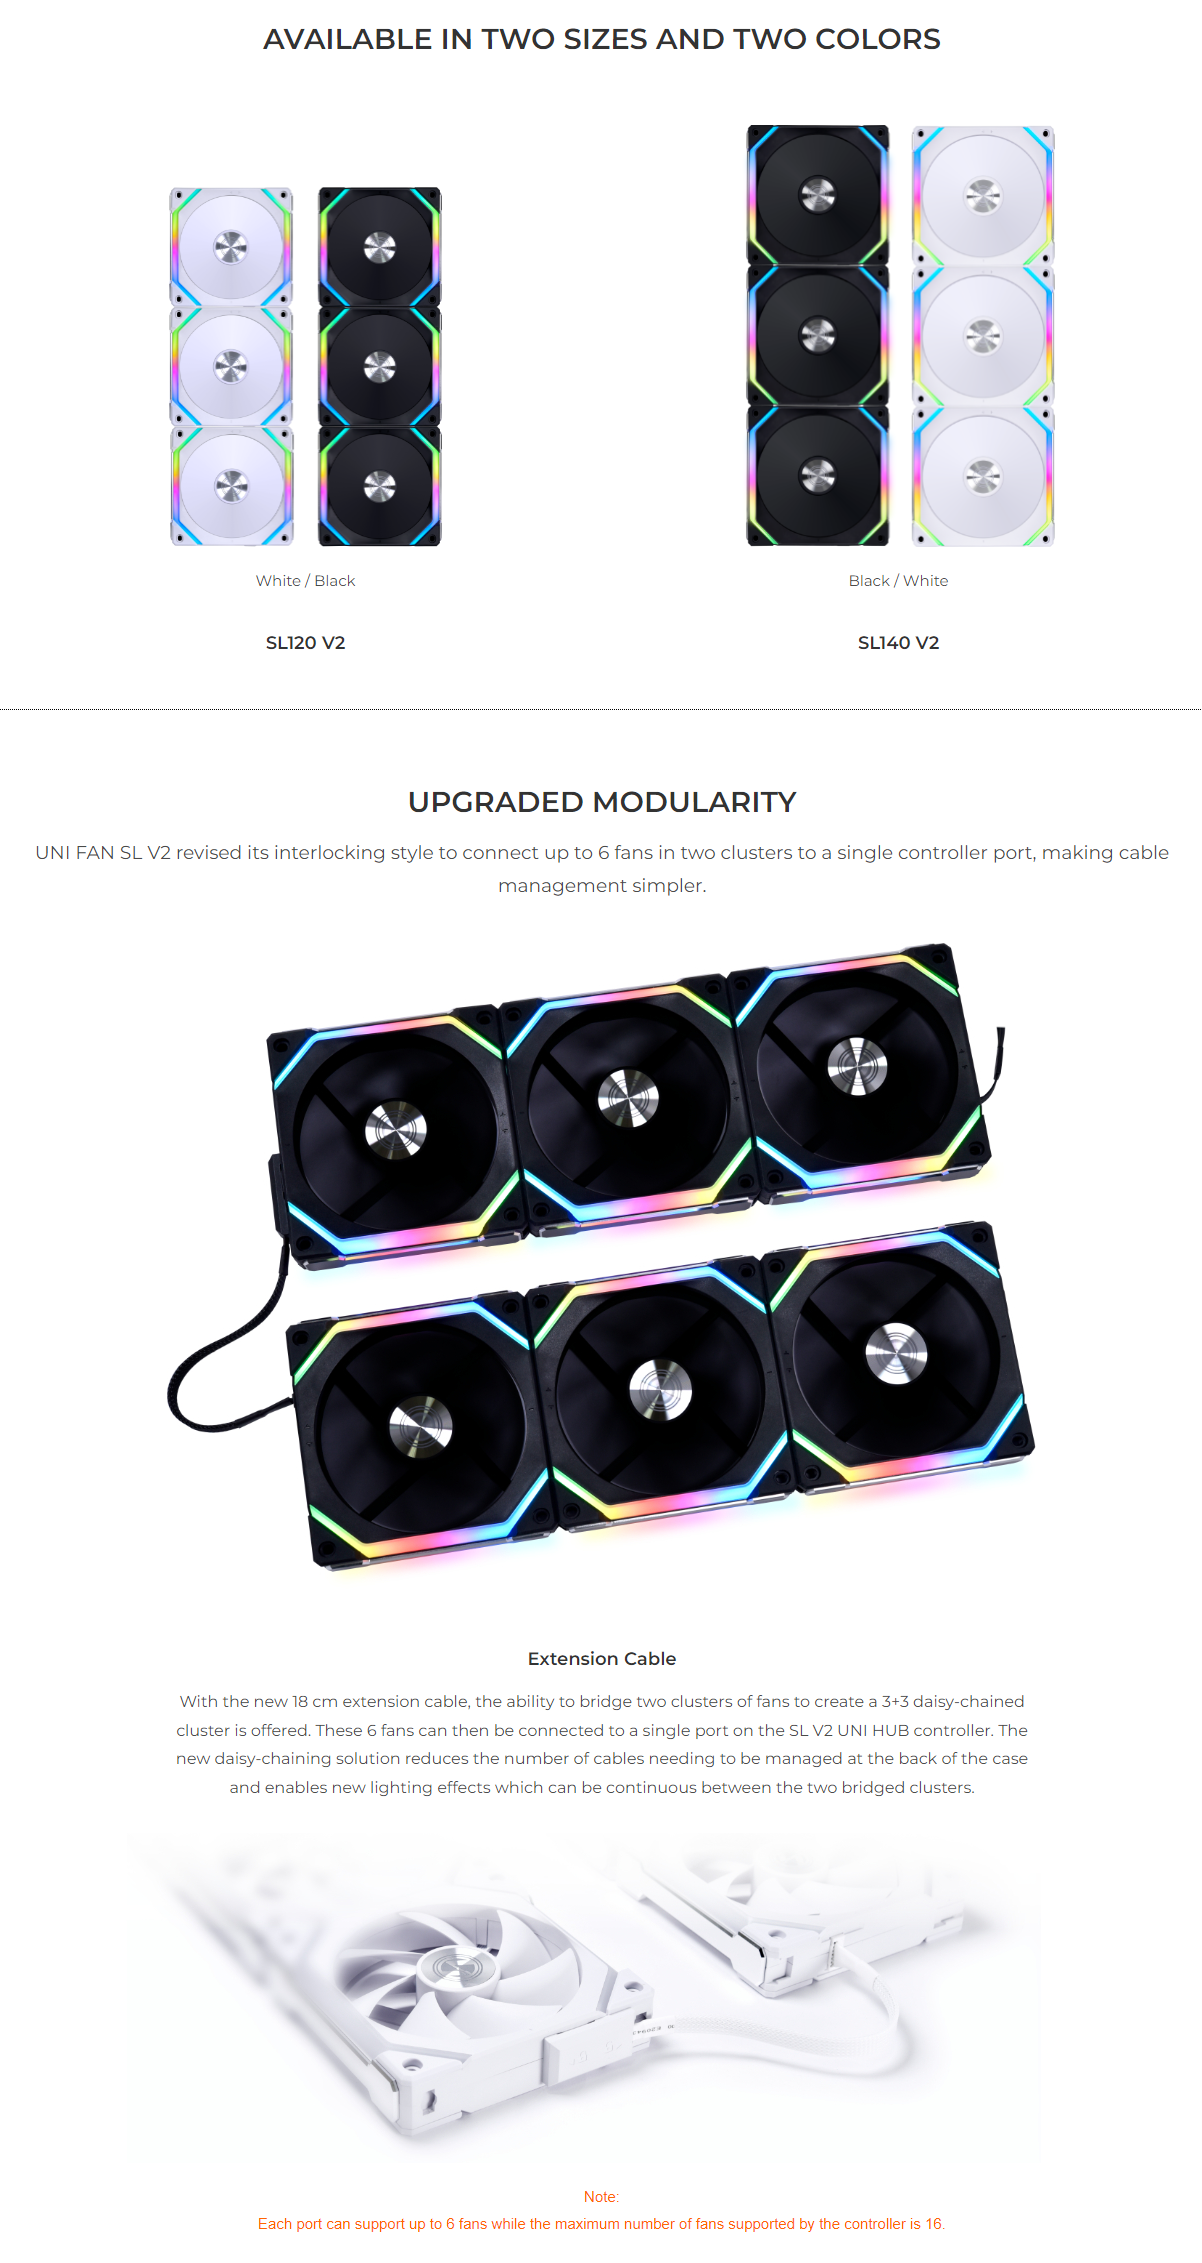 Lian Li UNI Fan SL120 V2 RGB Black Triple Pack with Controller -  UF-SL120V2-3B (V2)